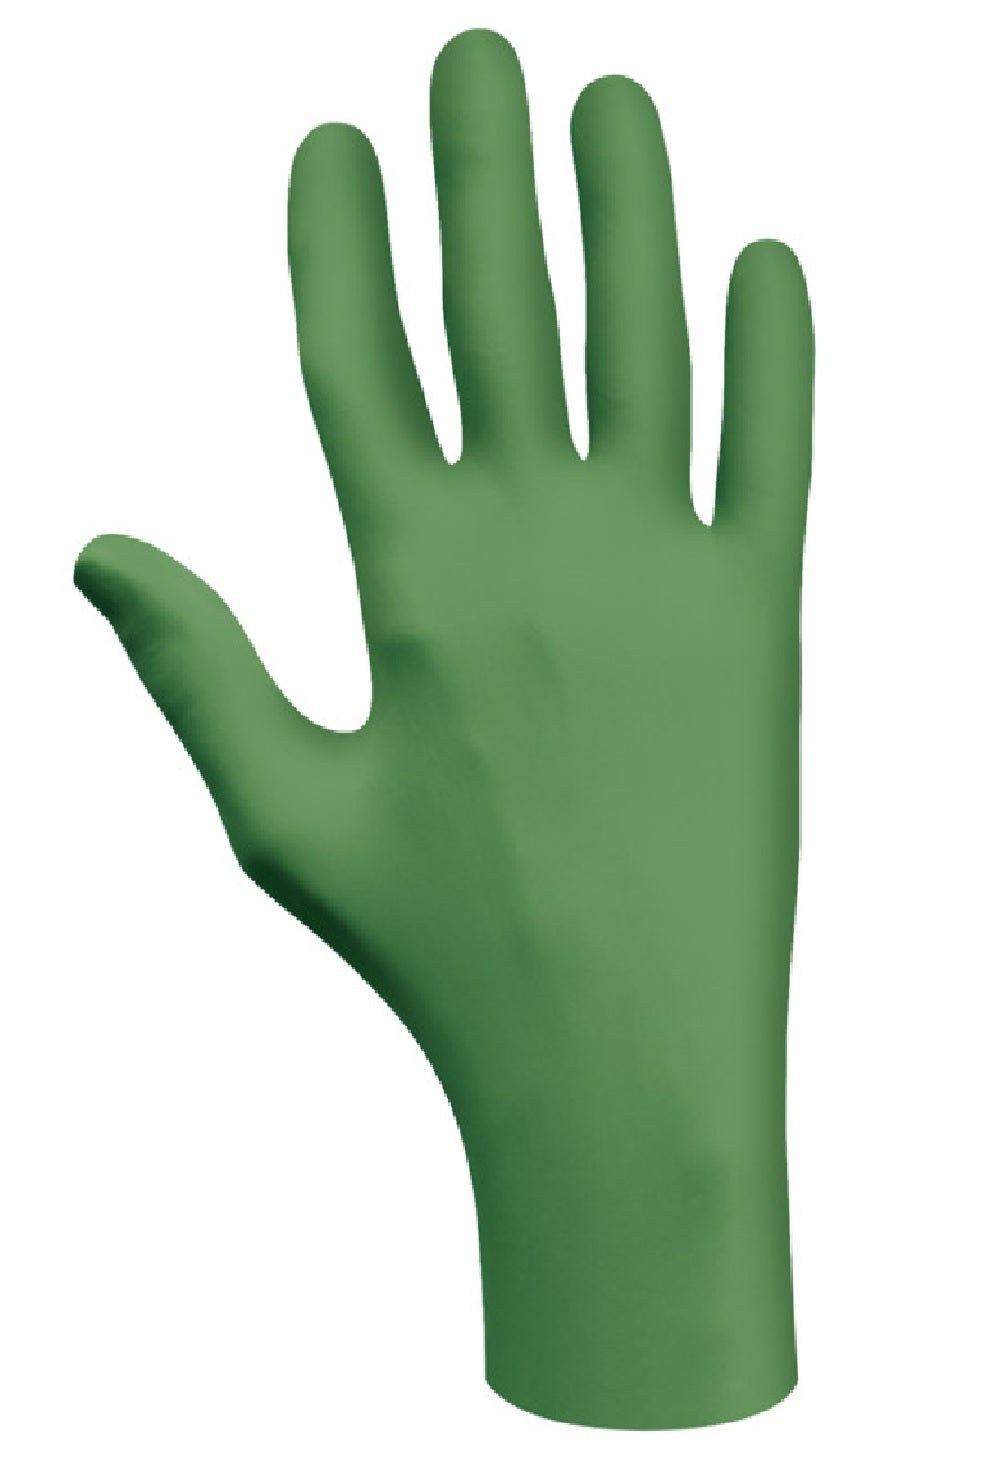 Showa 6110PFM Nitrile Disposable Gloves, Green